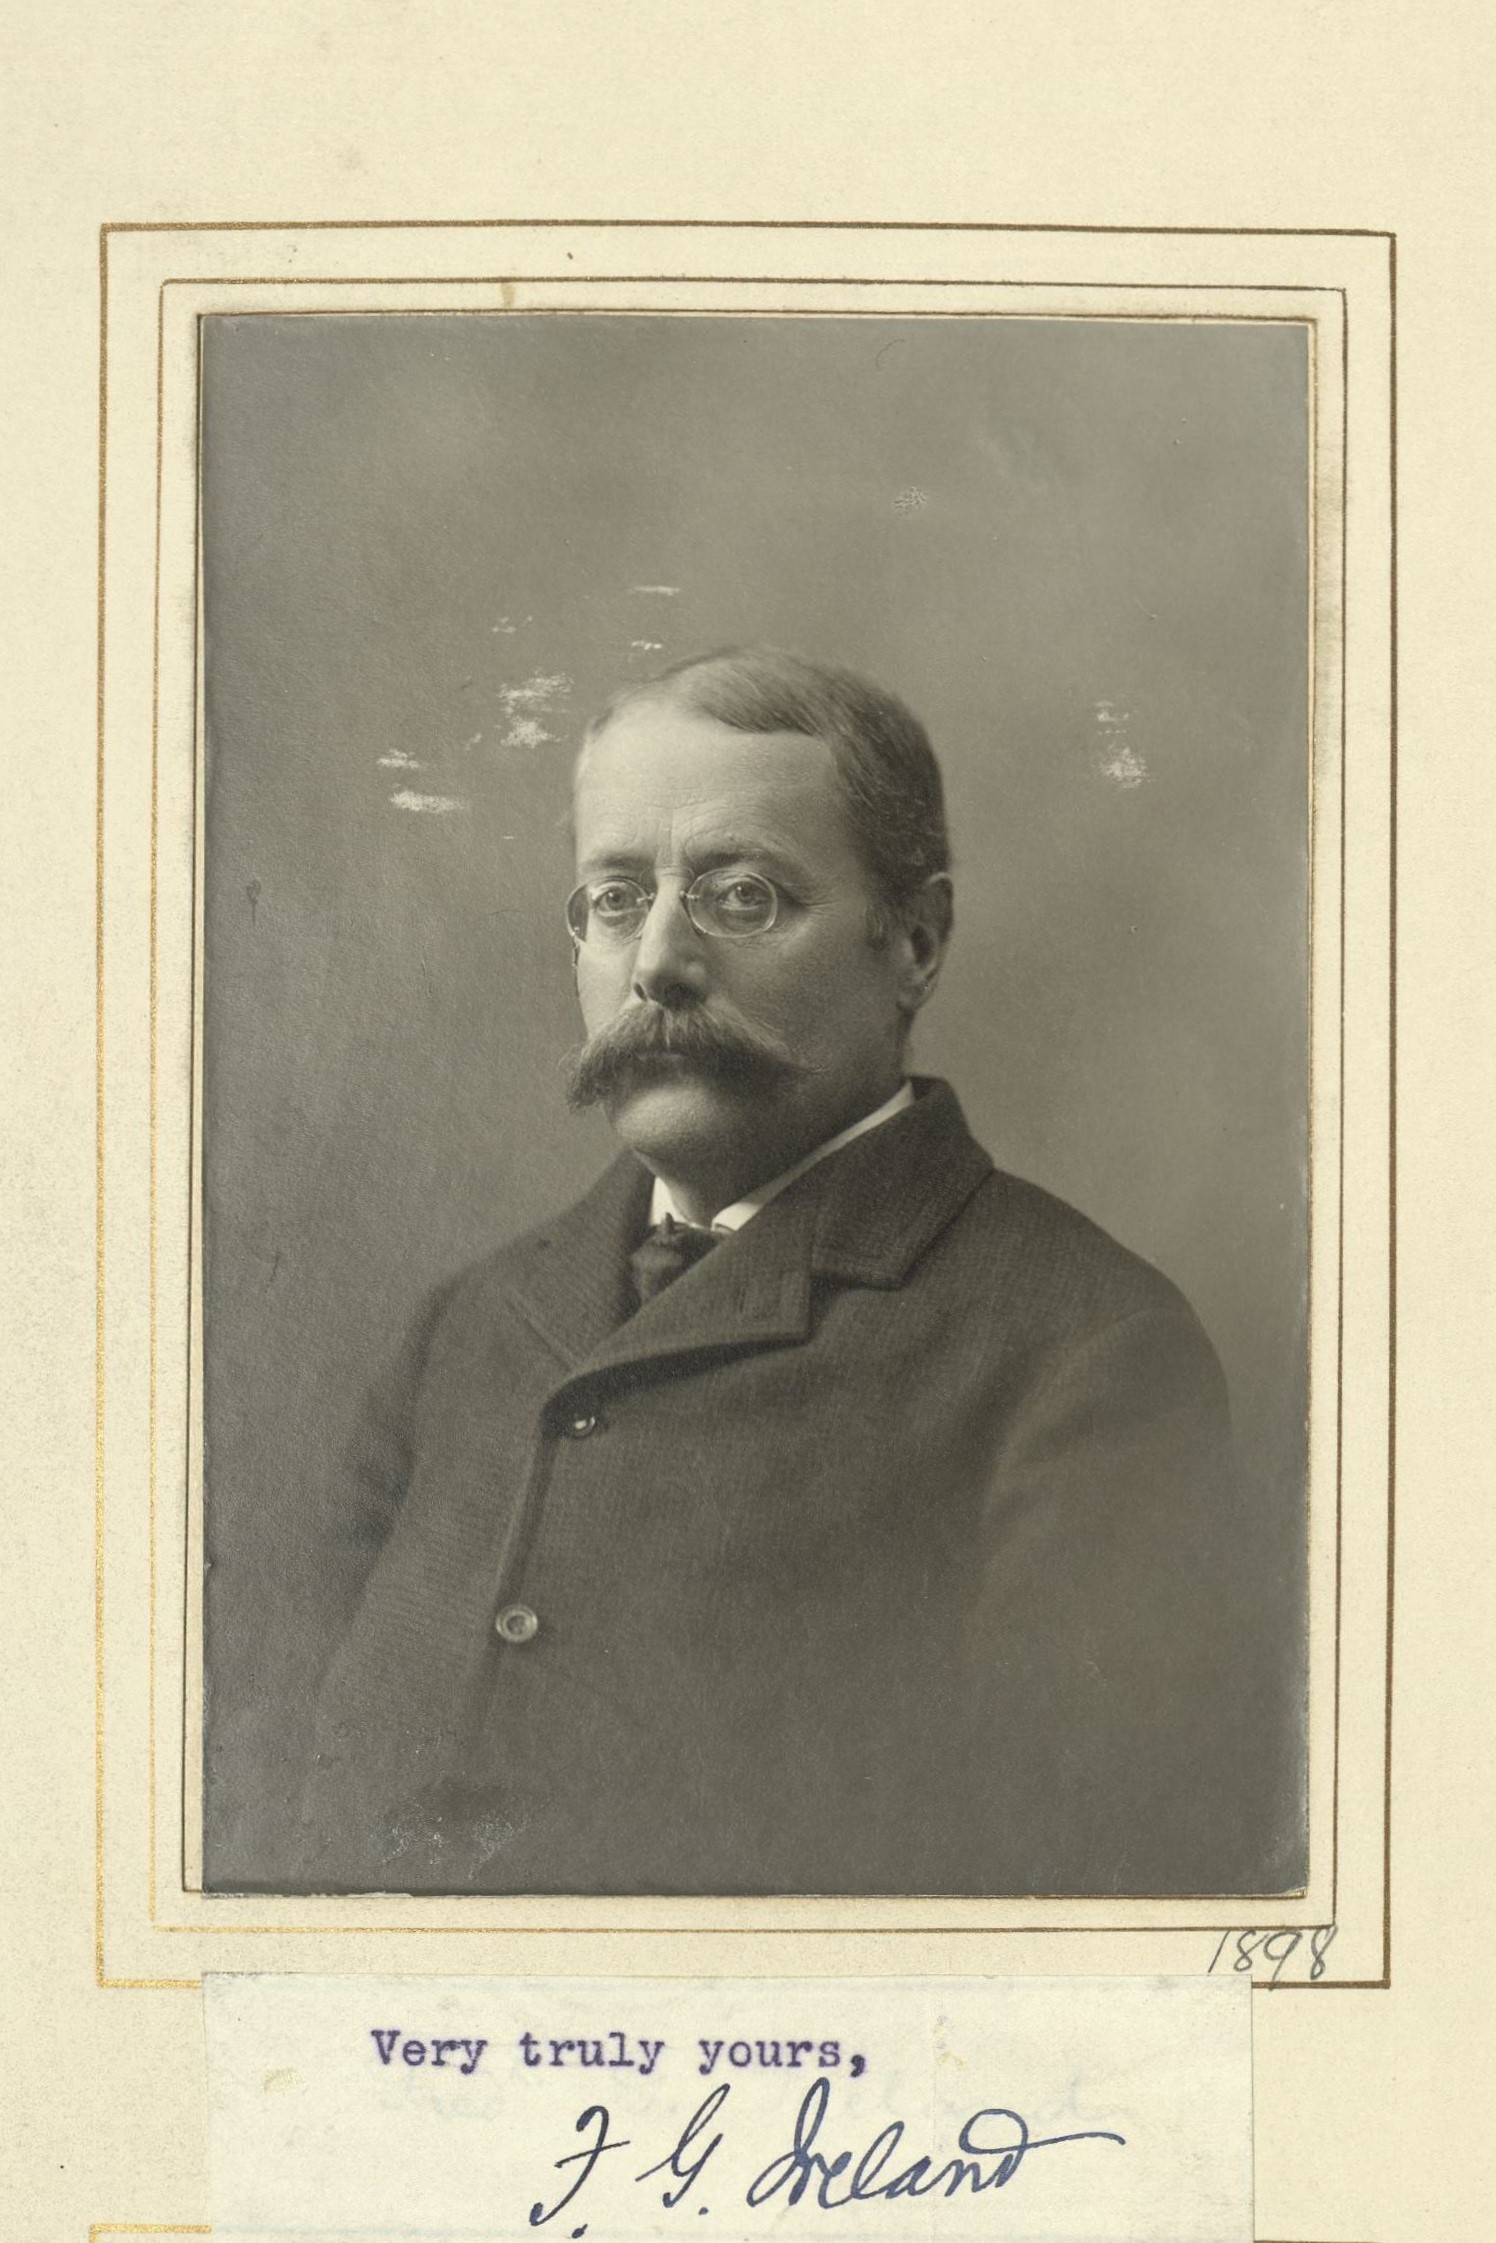 Member portrait of Frederick G. Ireland